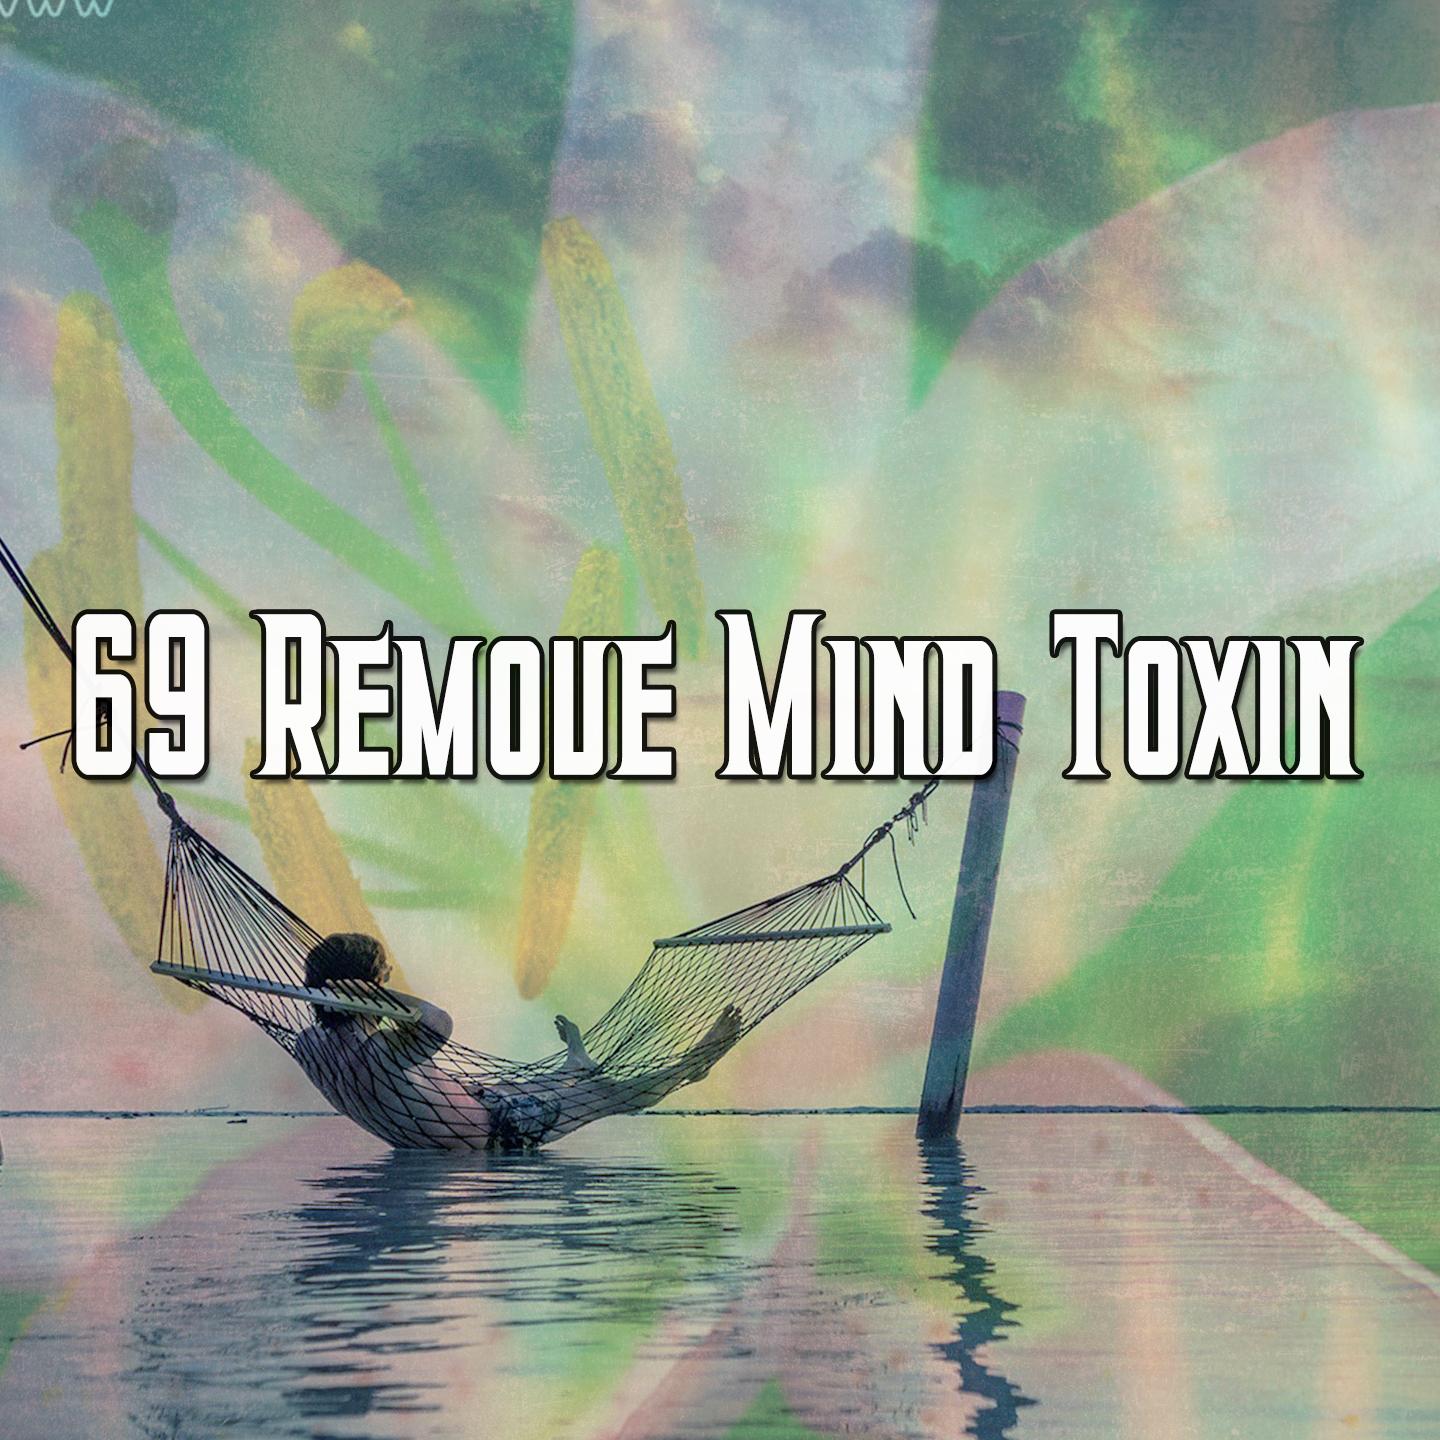 69 Remove Mind Toxin